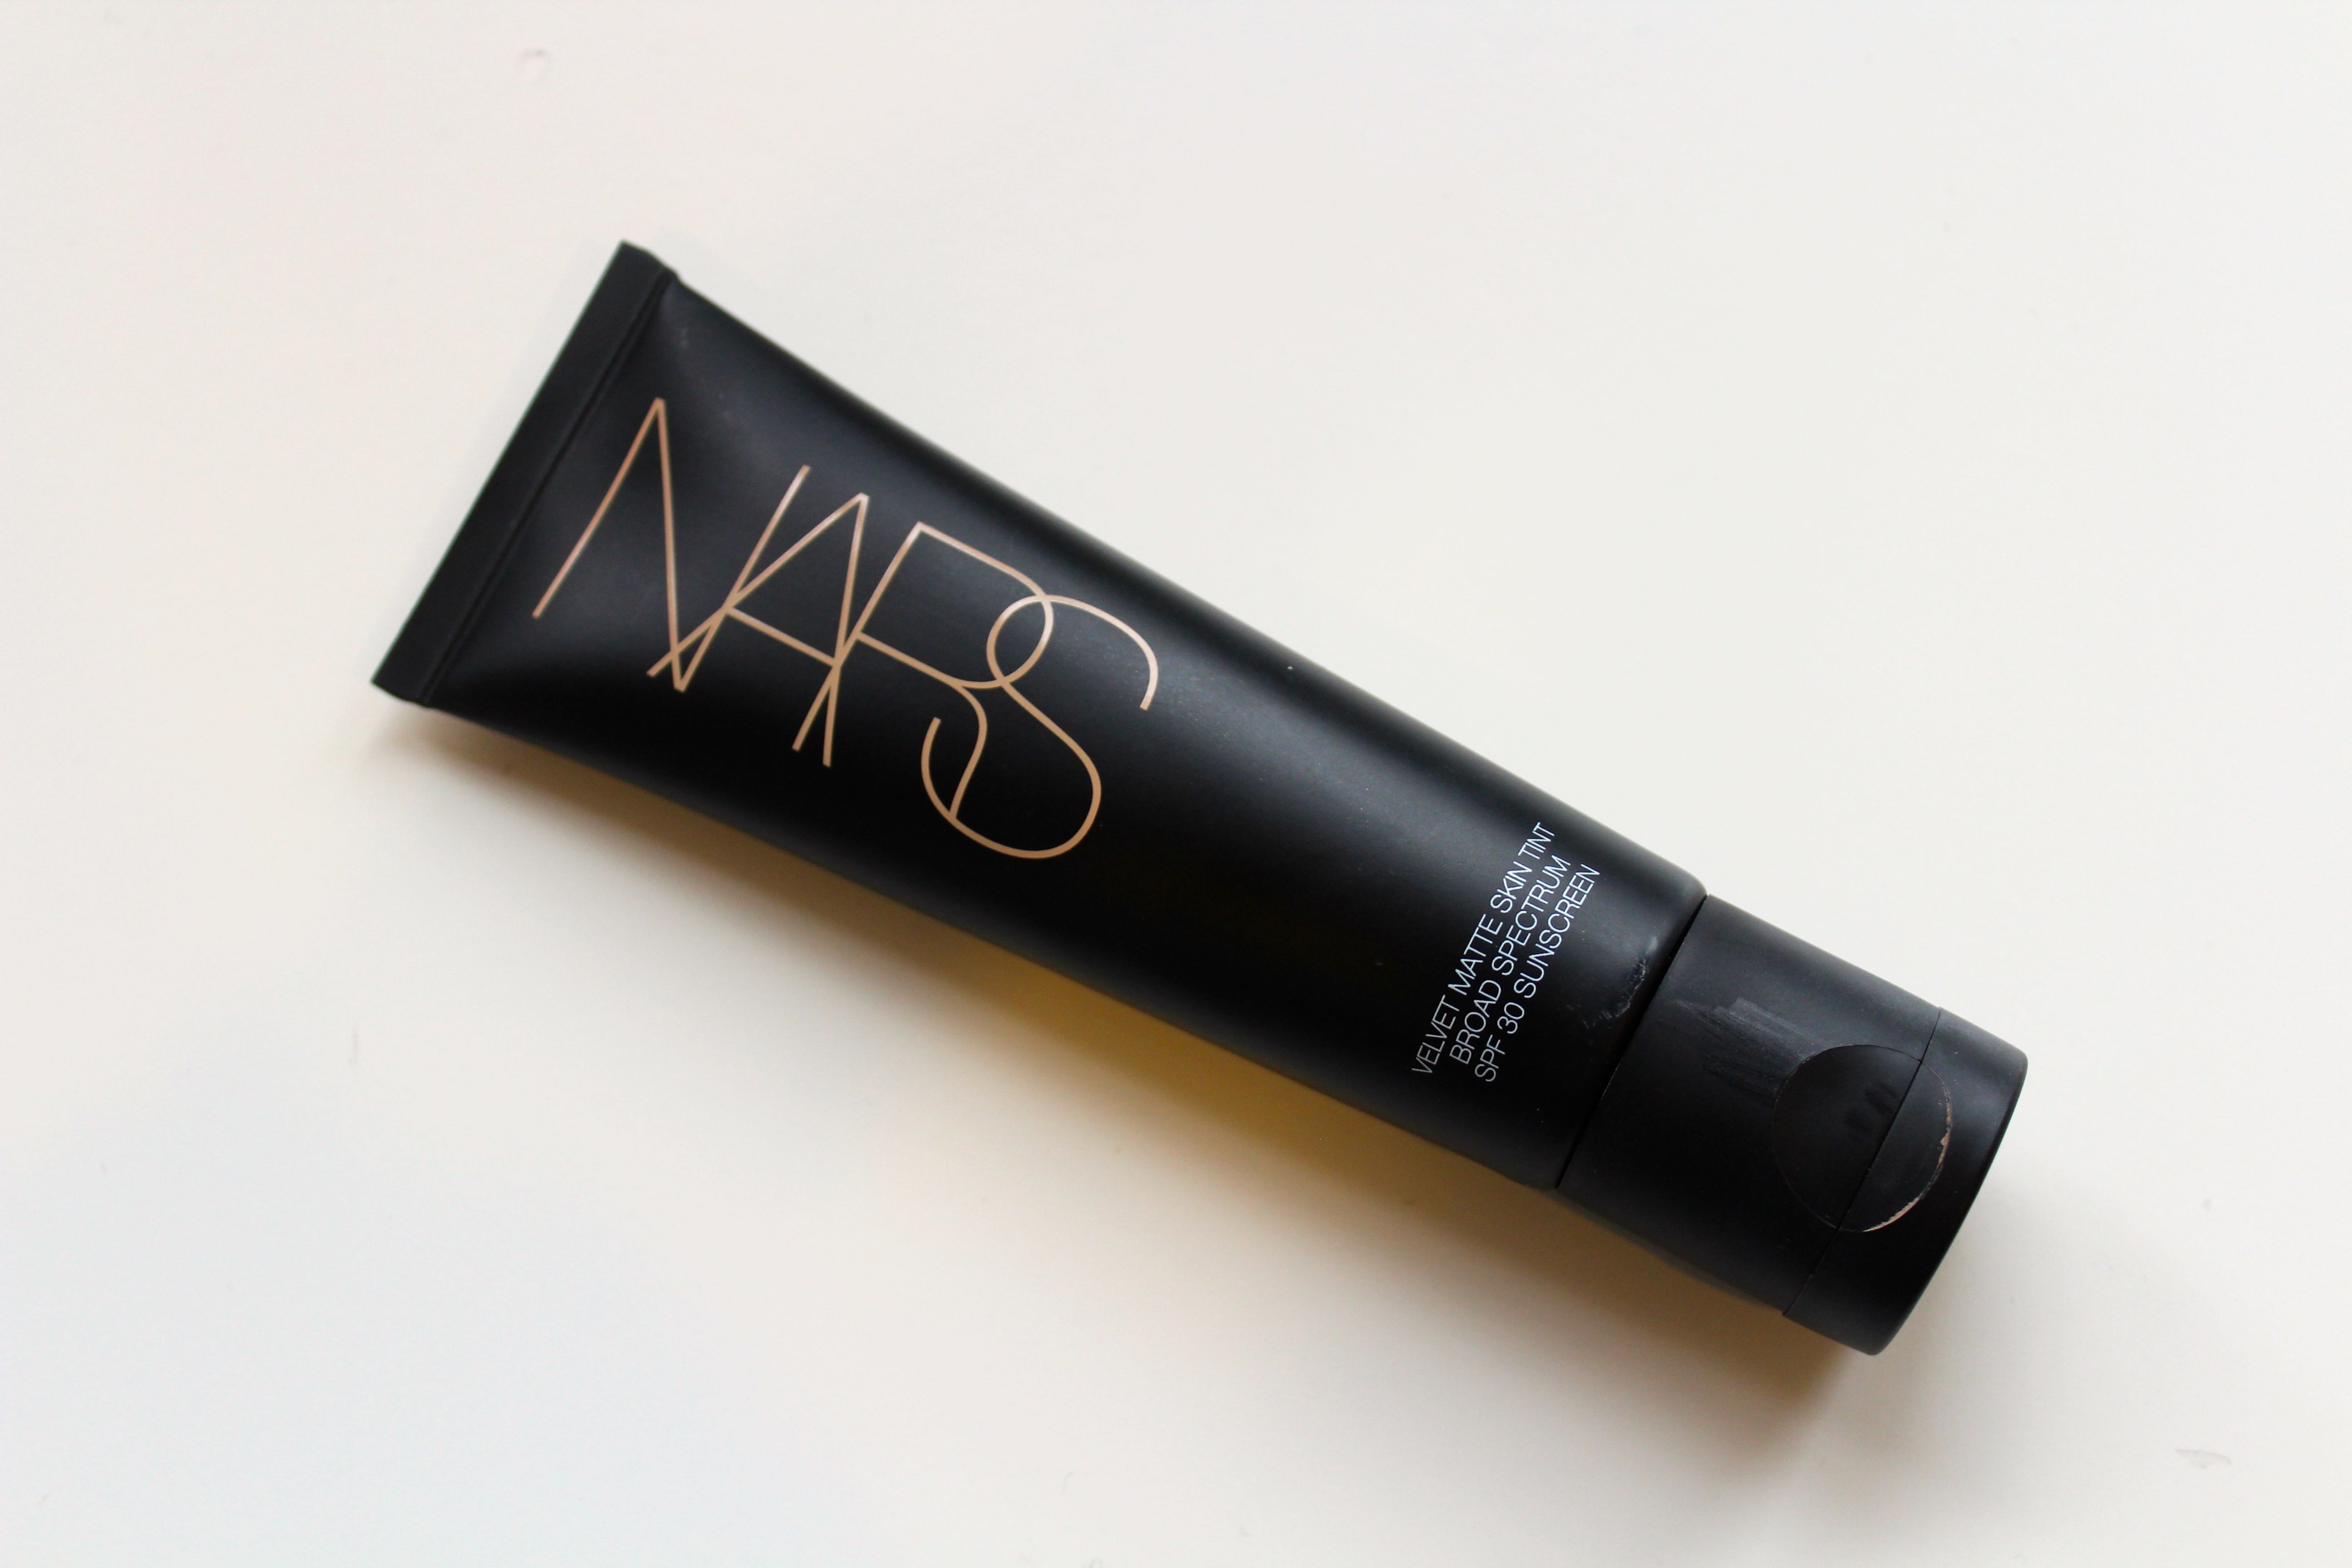 Nars Velvet Matte Skin Tint review by Face Made Up